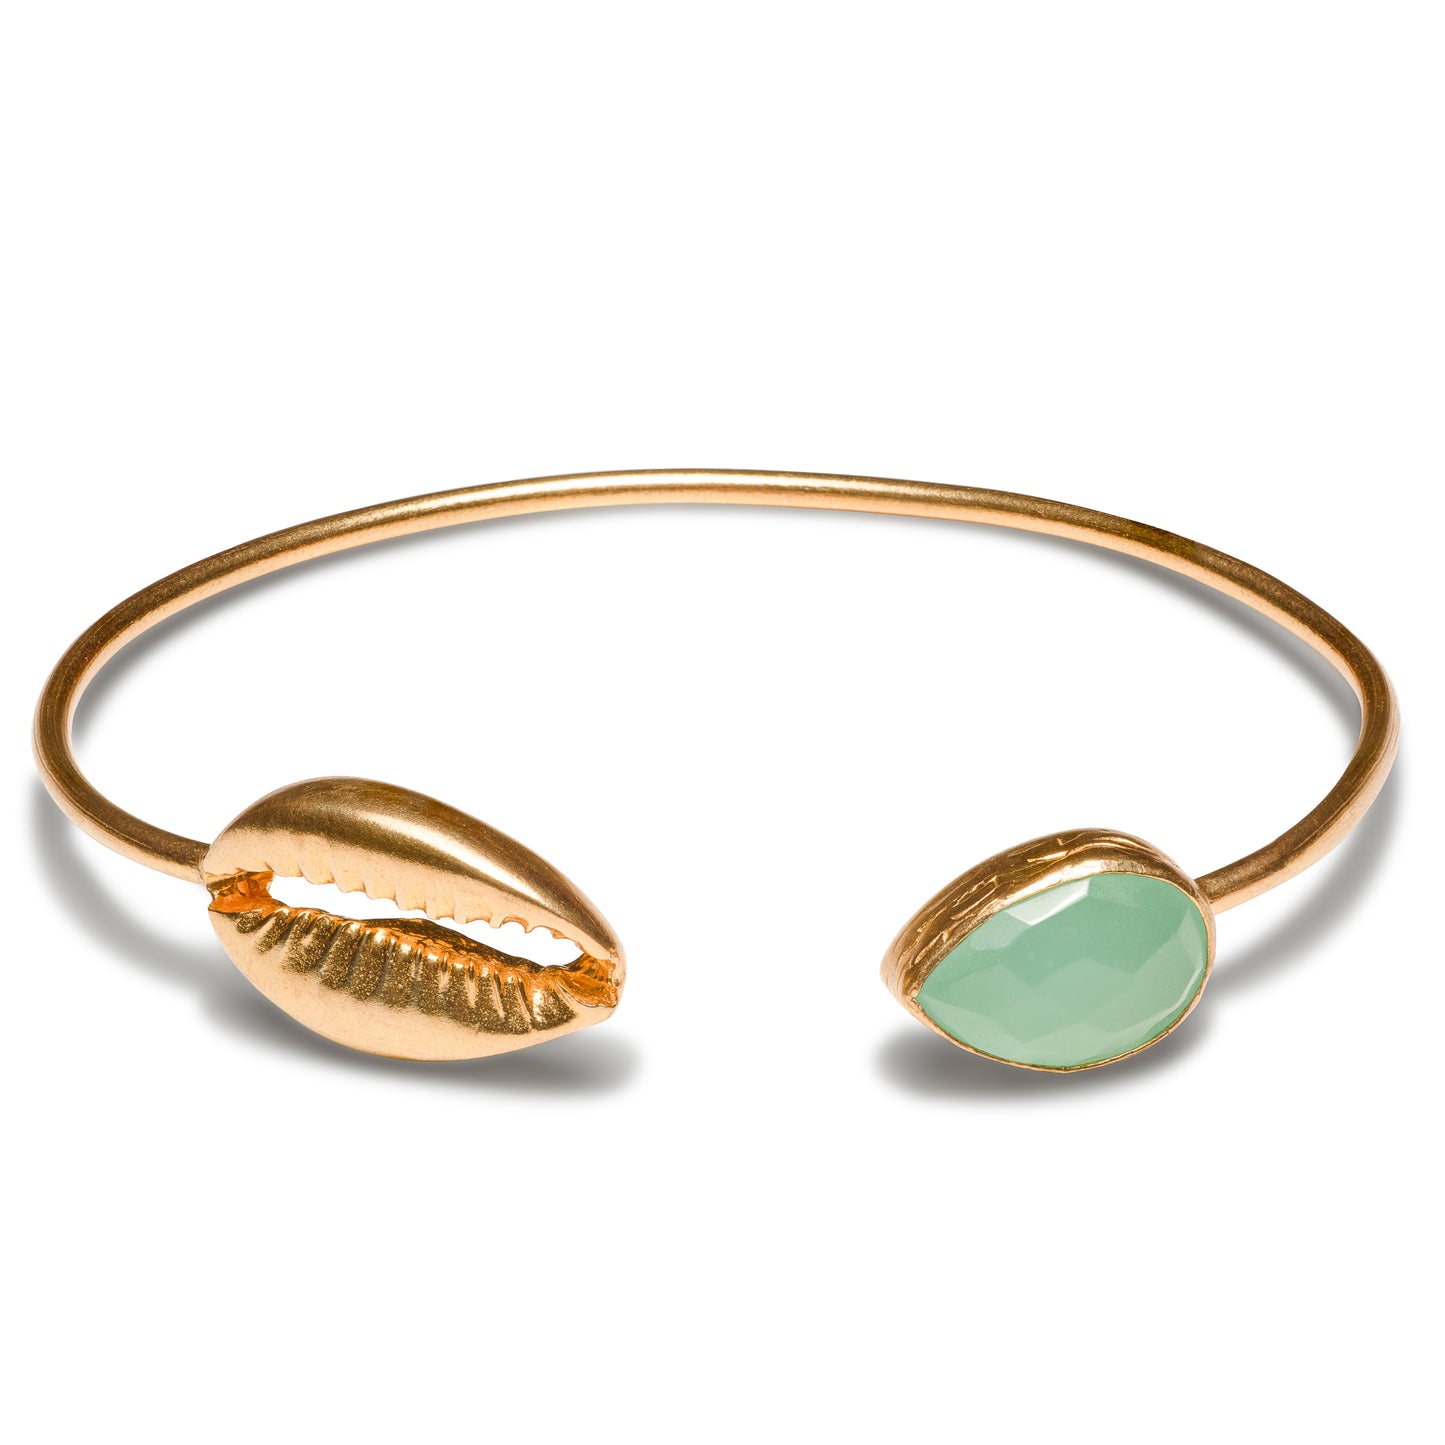 Women's Seashell Gold Cuff Bracelet with Aquamarine Stone adjustable at RM Kandy